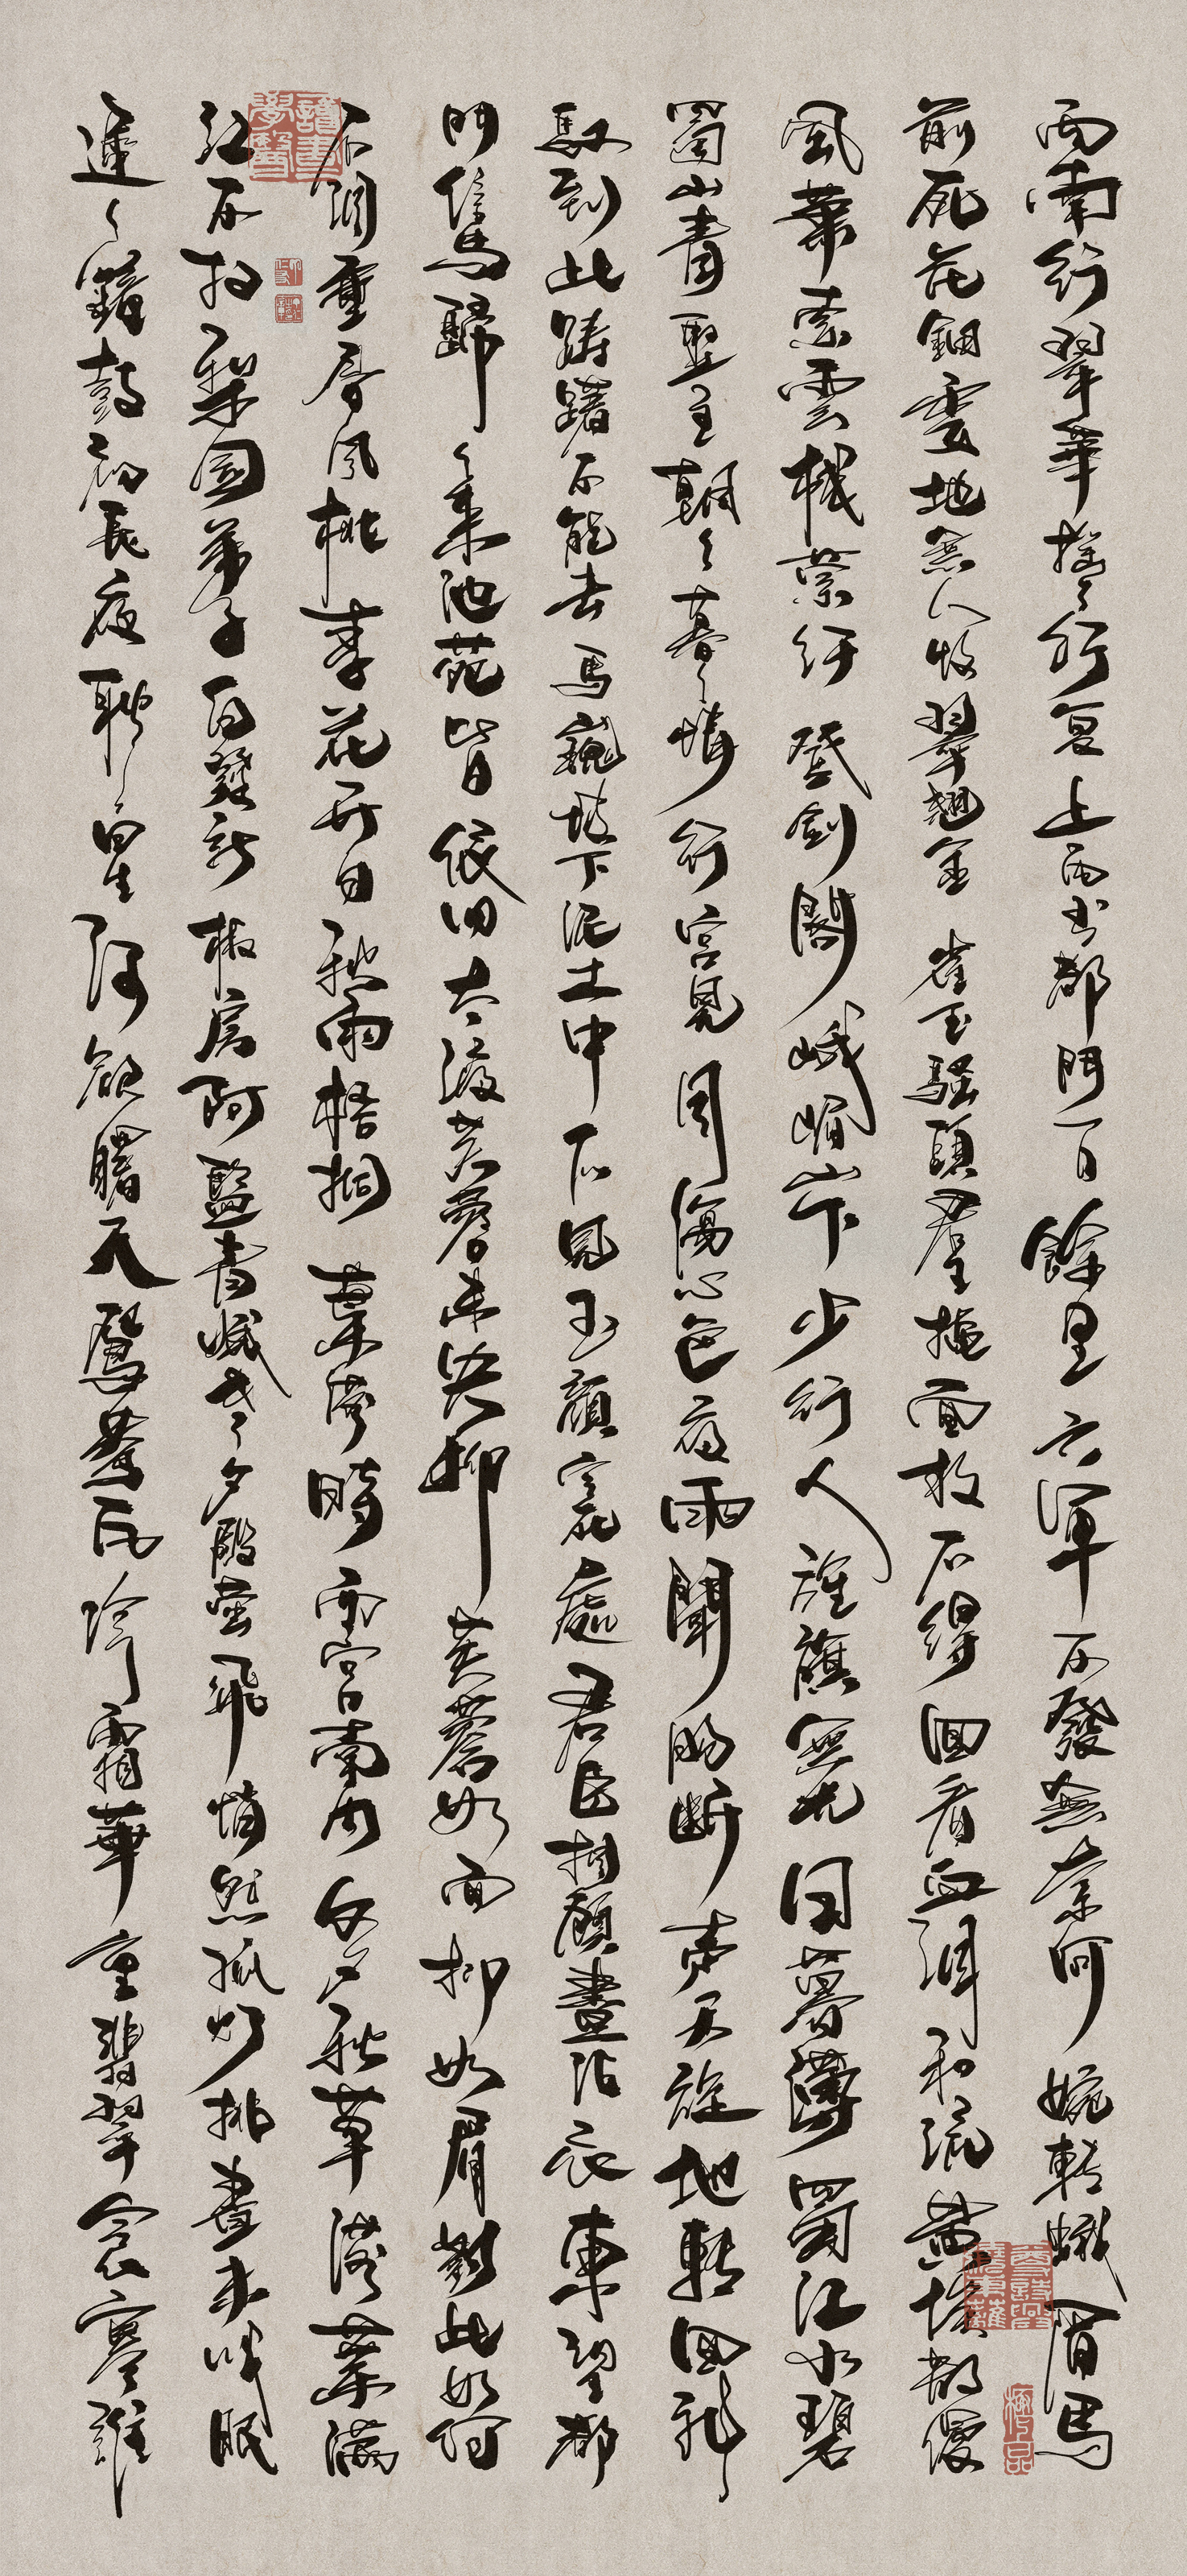 8P Handwritten 